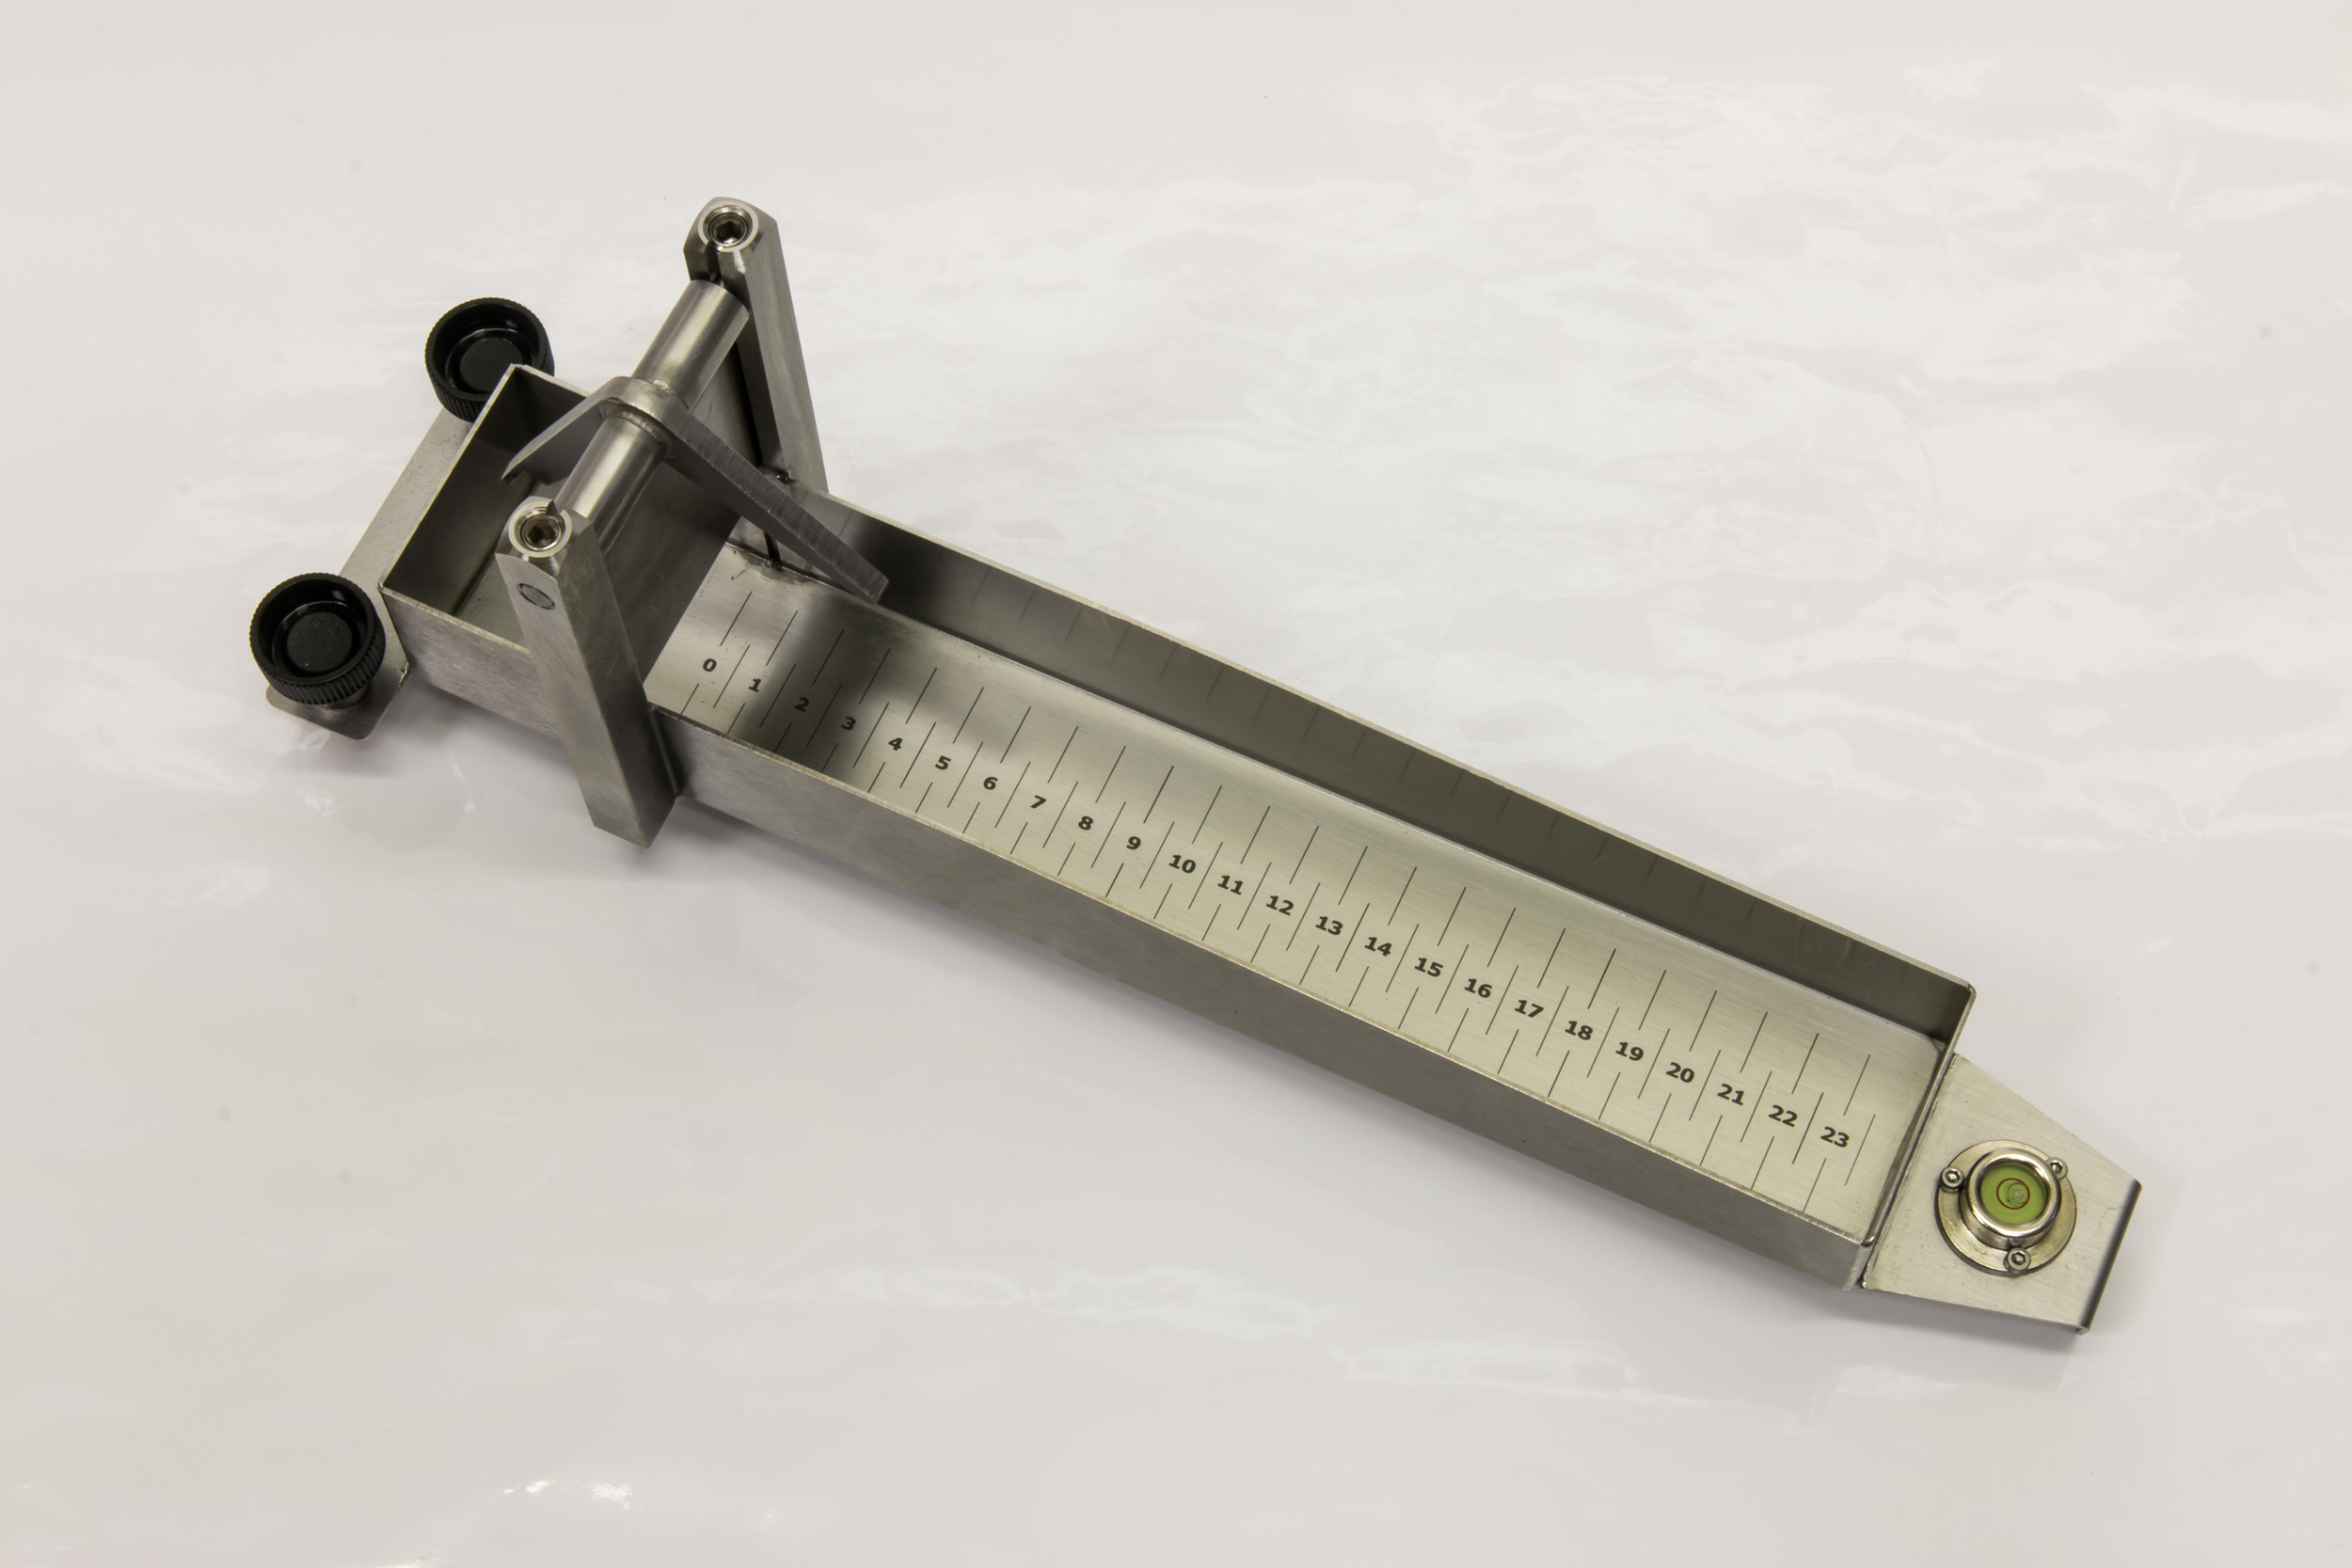 Bostwick Viskosimeter Consistometer 24cm - greensenselab